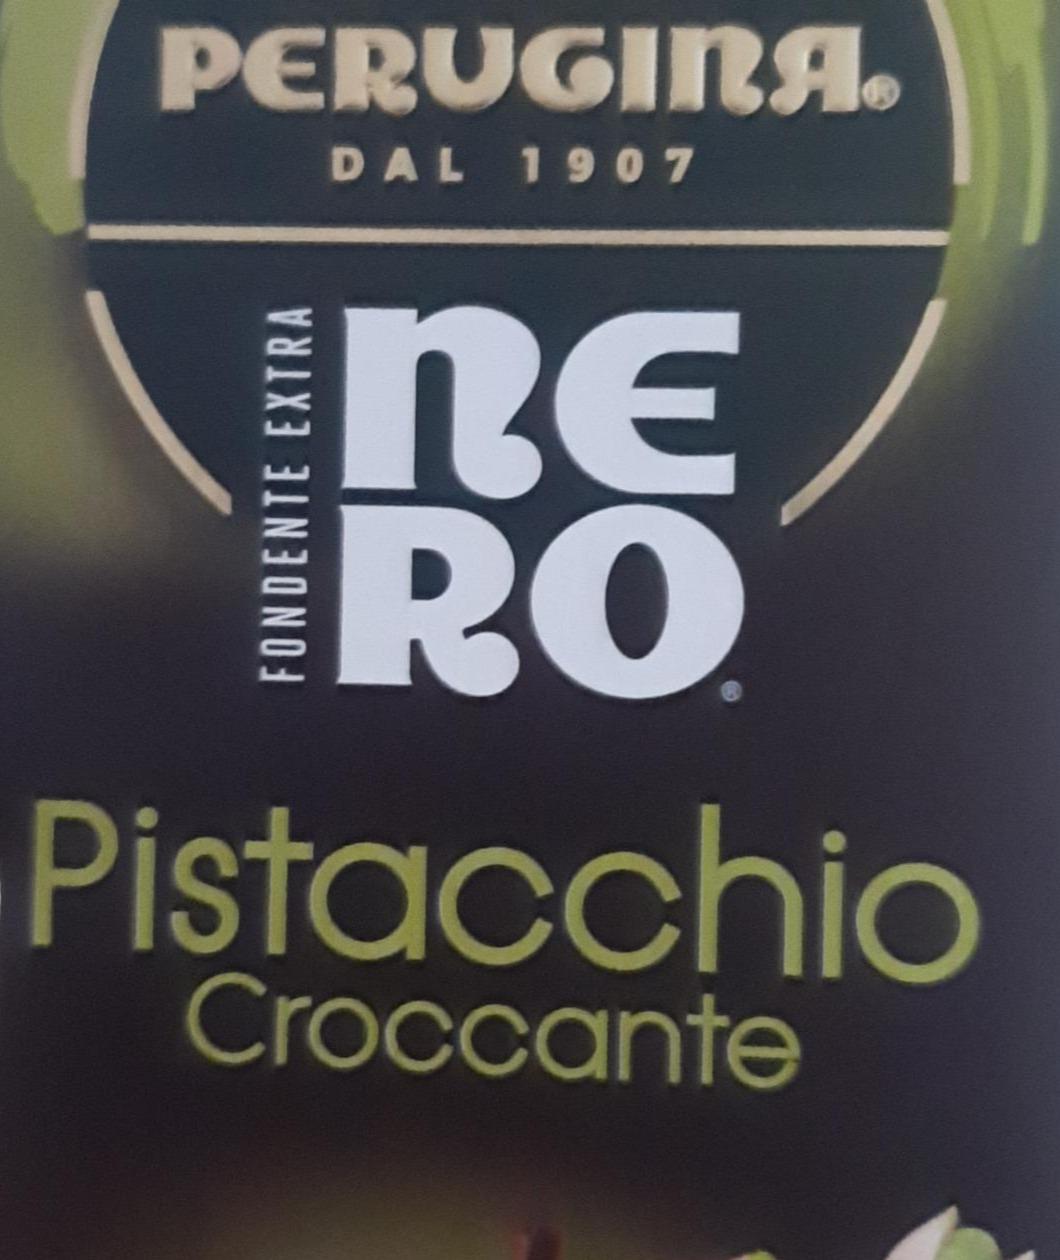 Фото - Fondente extra nero pistachio croccante Perugina